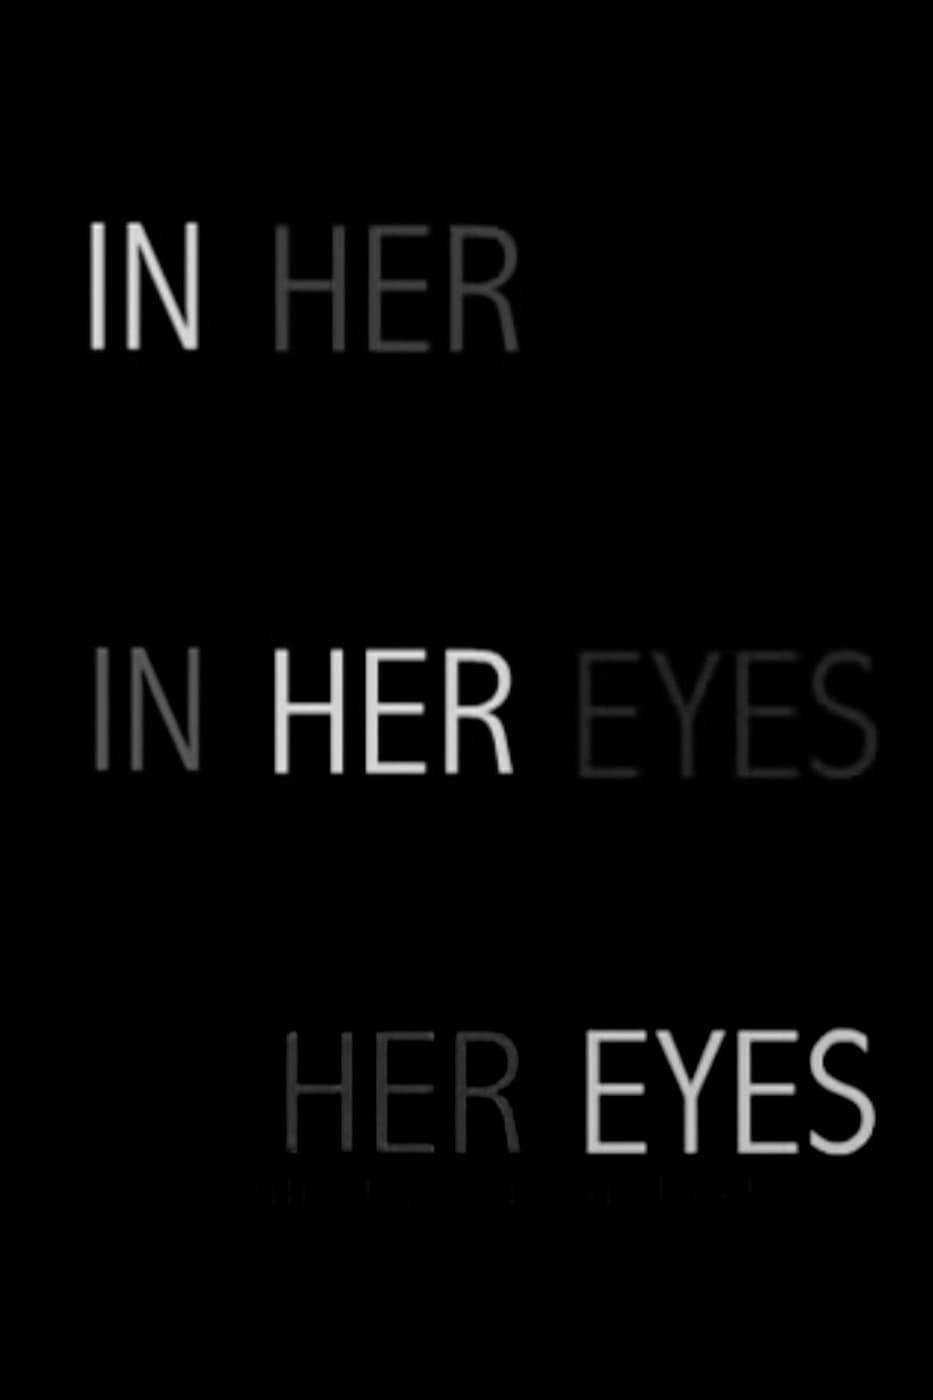 In Her Eyes